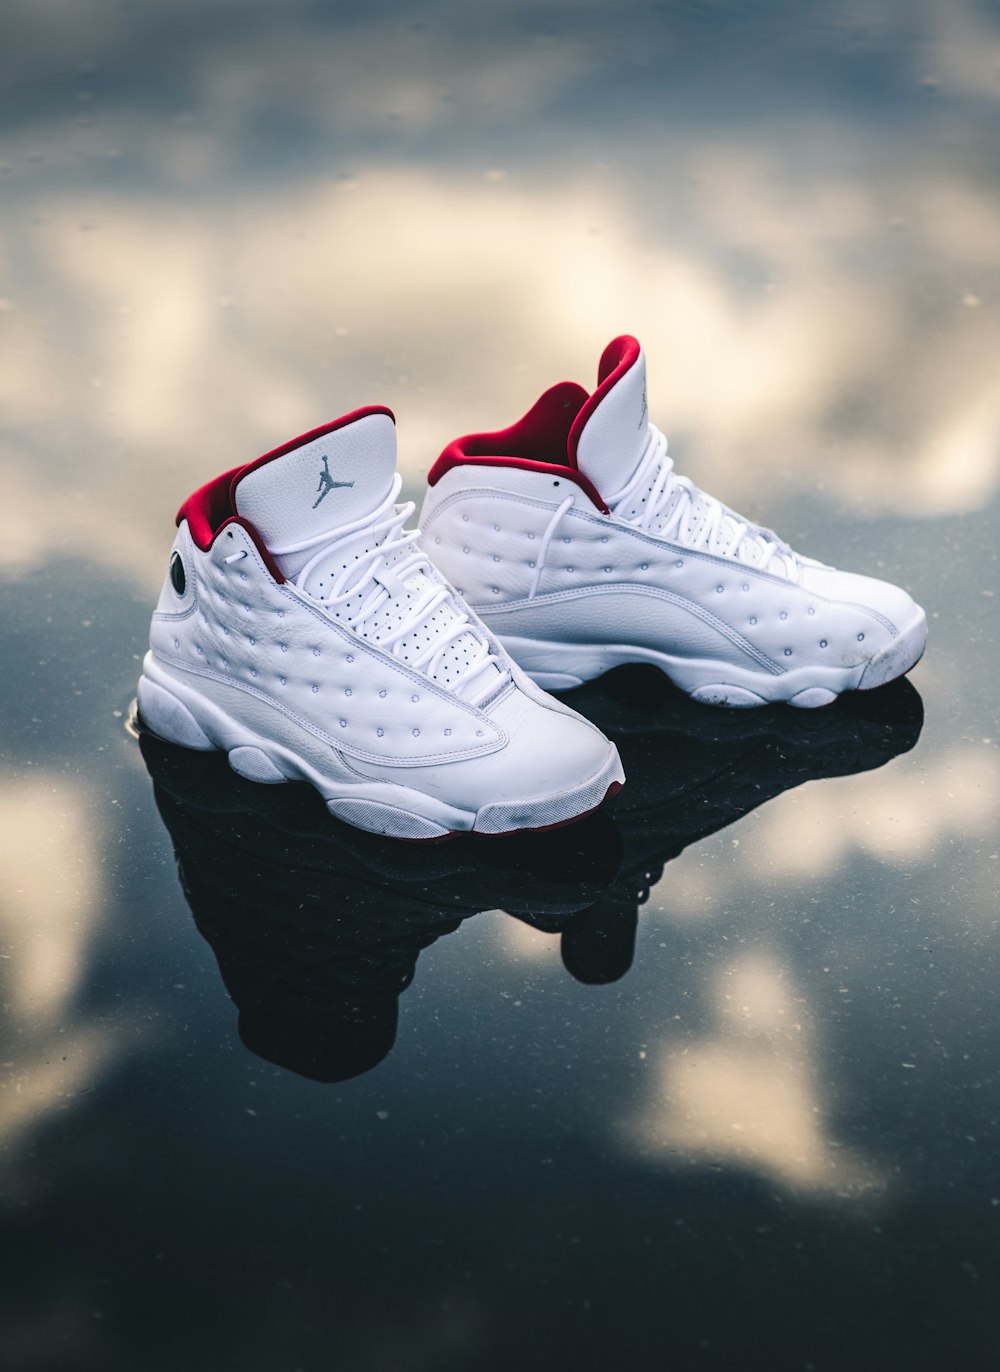 white-and-red Air Jordan 13's photo – Free Shoe Image on Unsplash